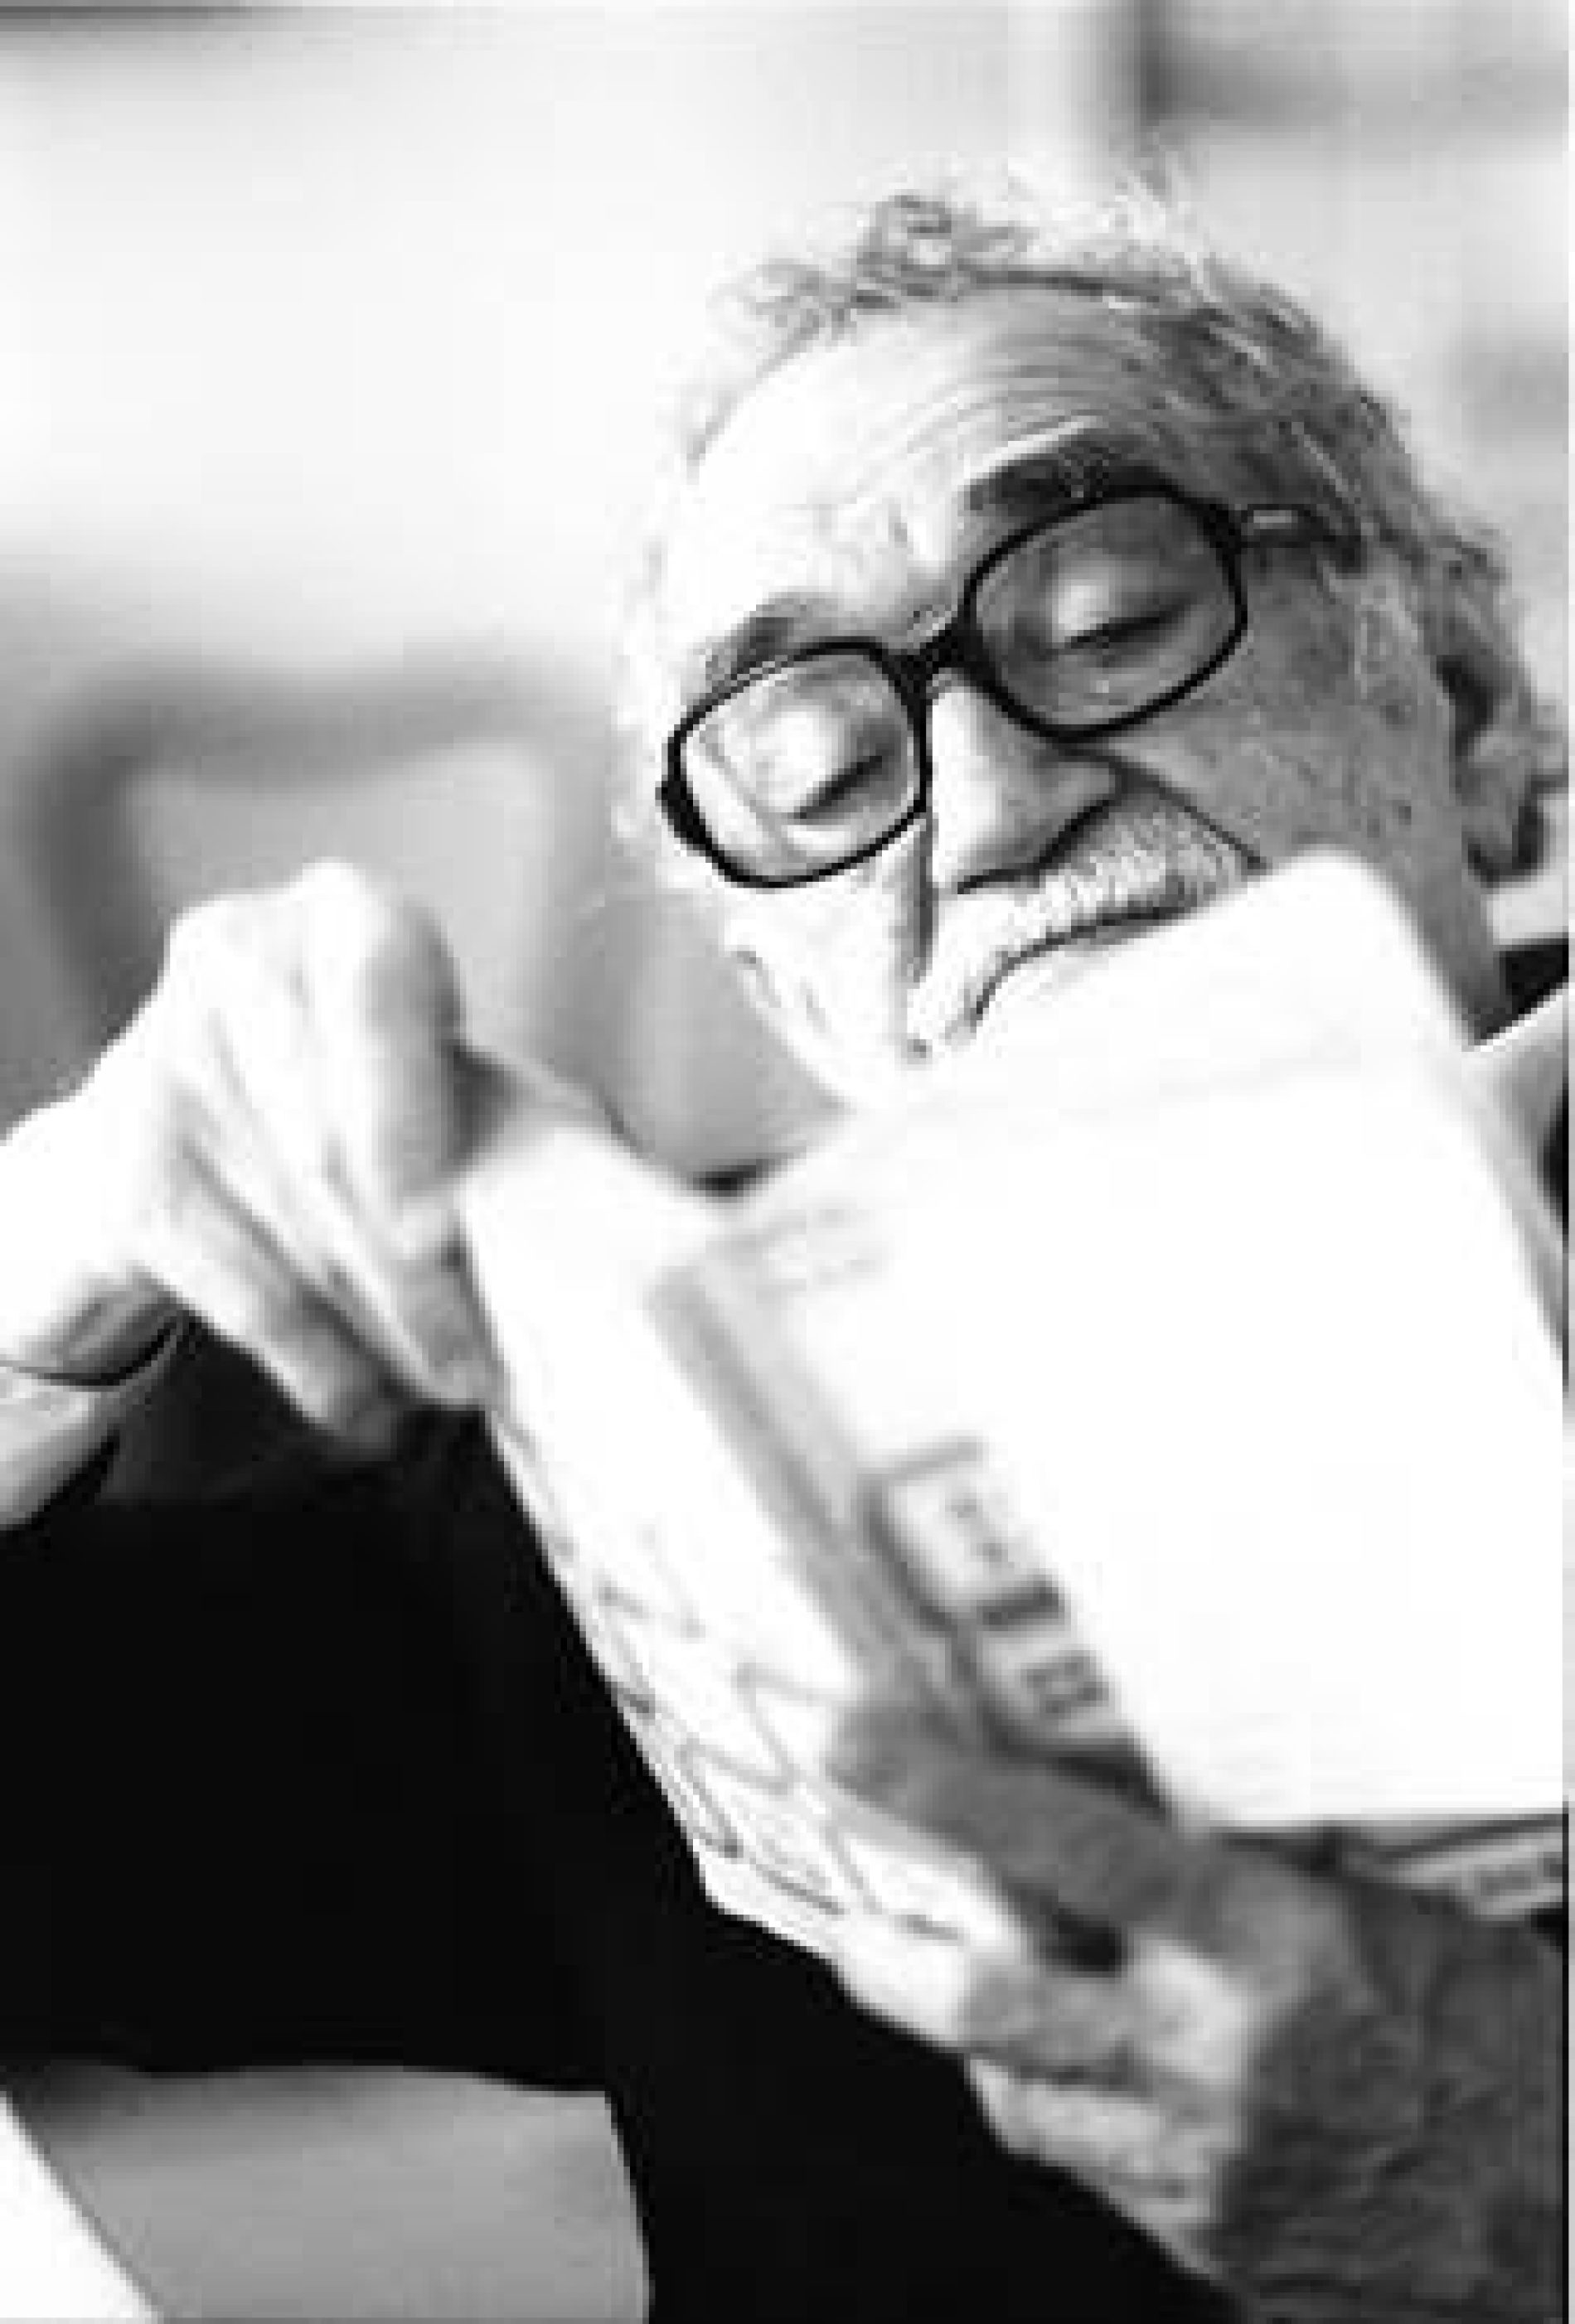 Random House publicará la novela inédita de Gabriel García Márquez